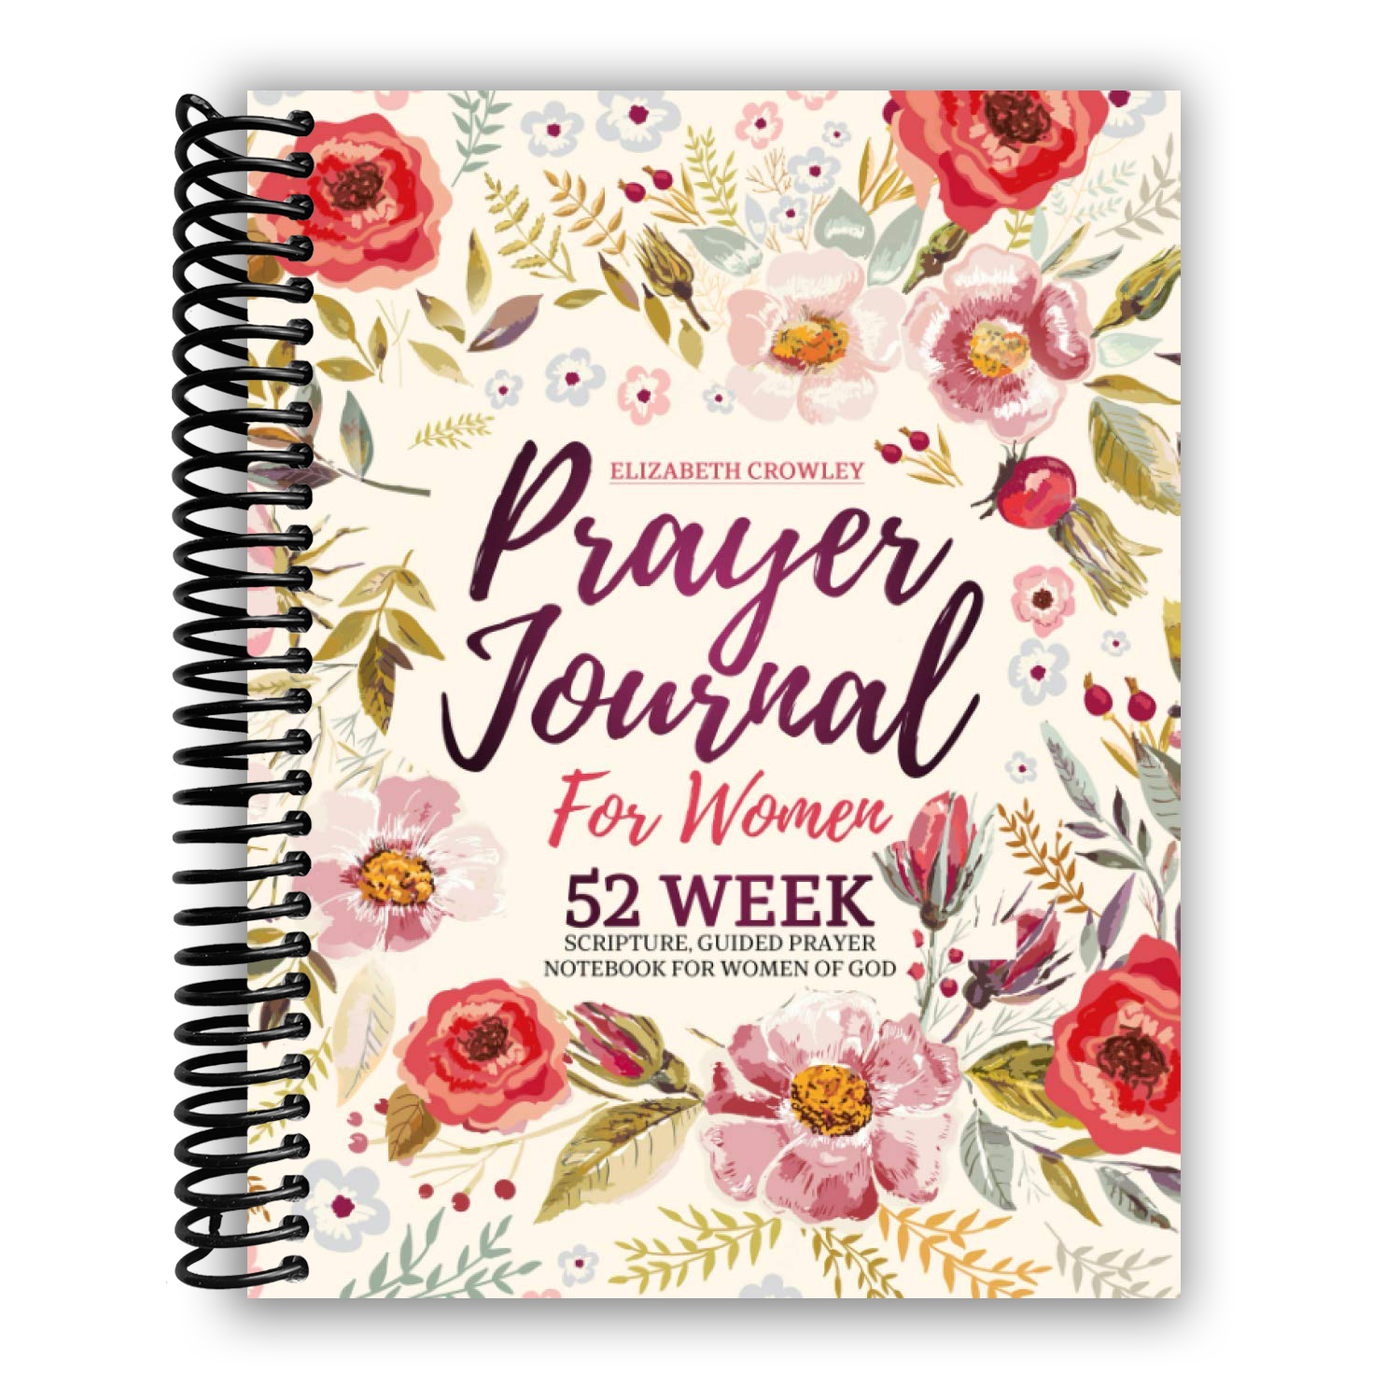 Prayer Journal For Women: 52 Week Scripture, Guided Prayer Notebook For Women Of God (Spiral Bound)